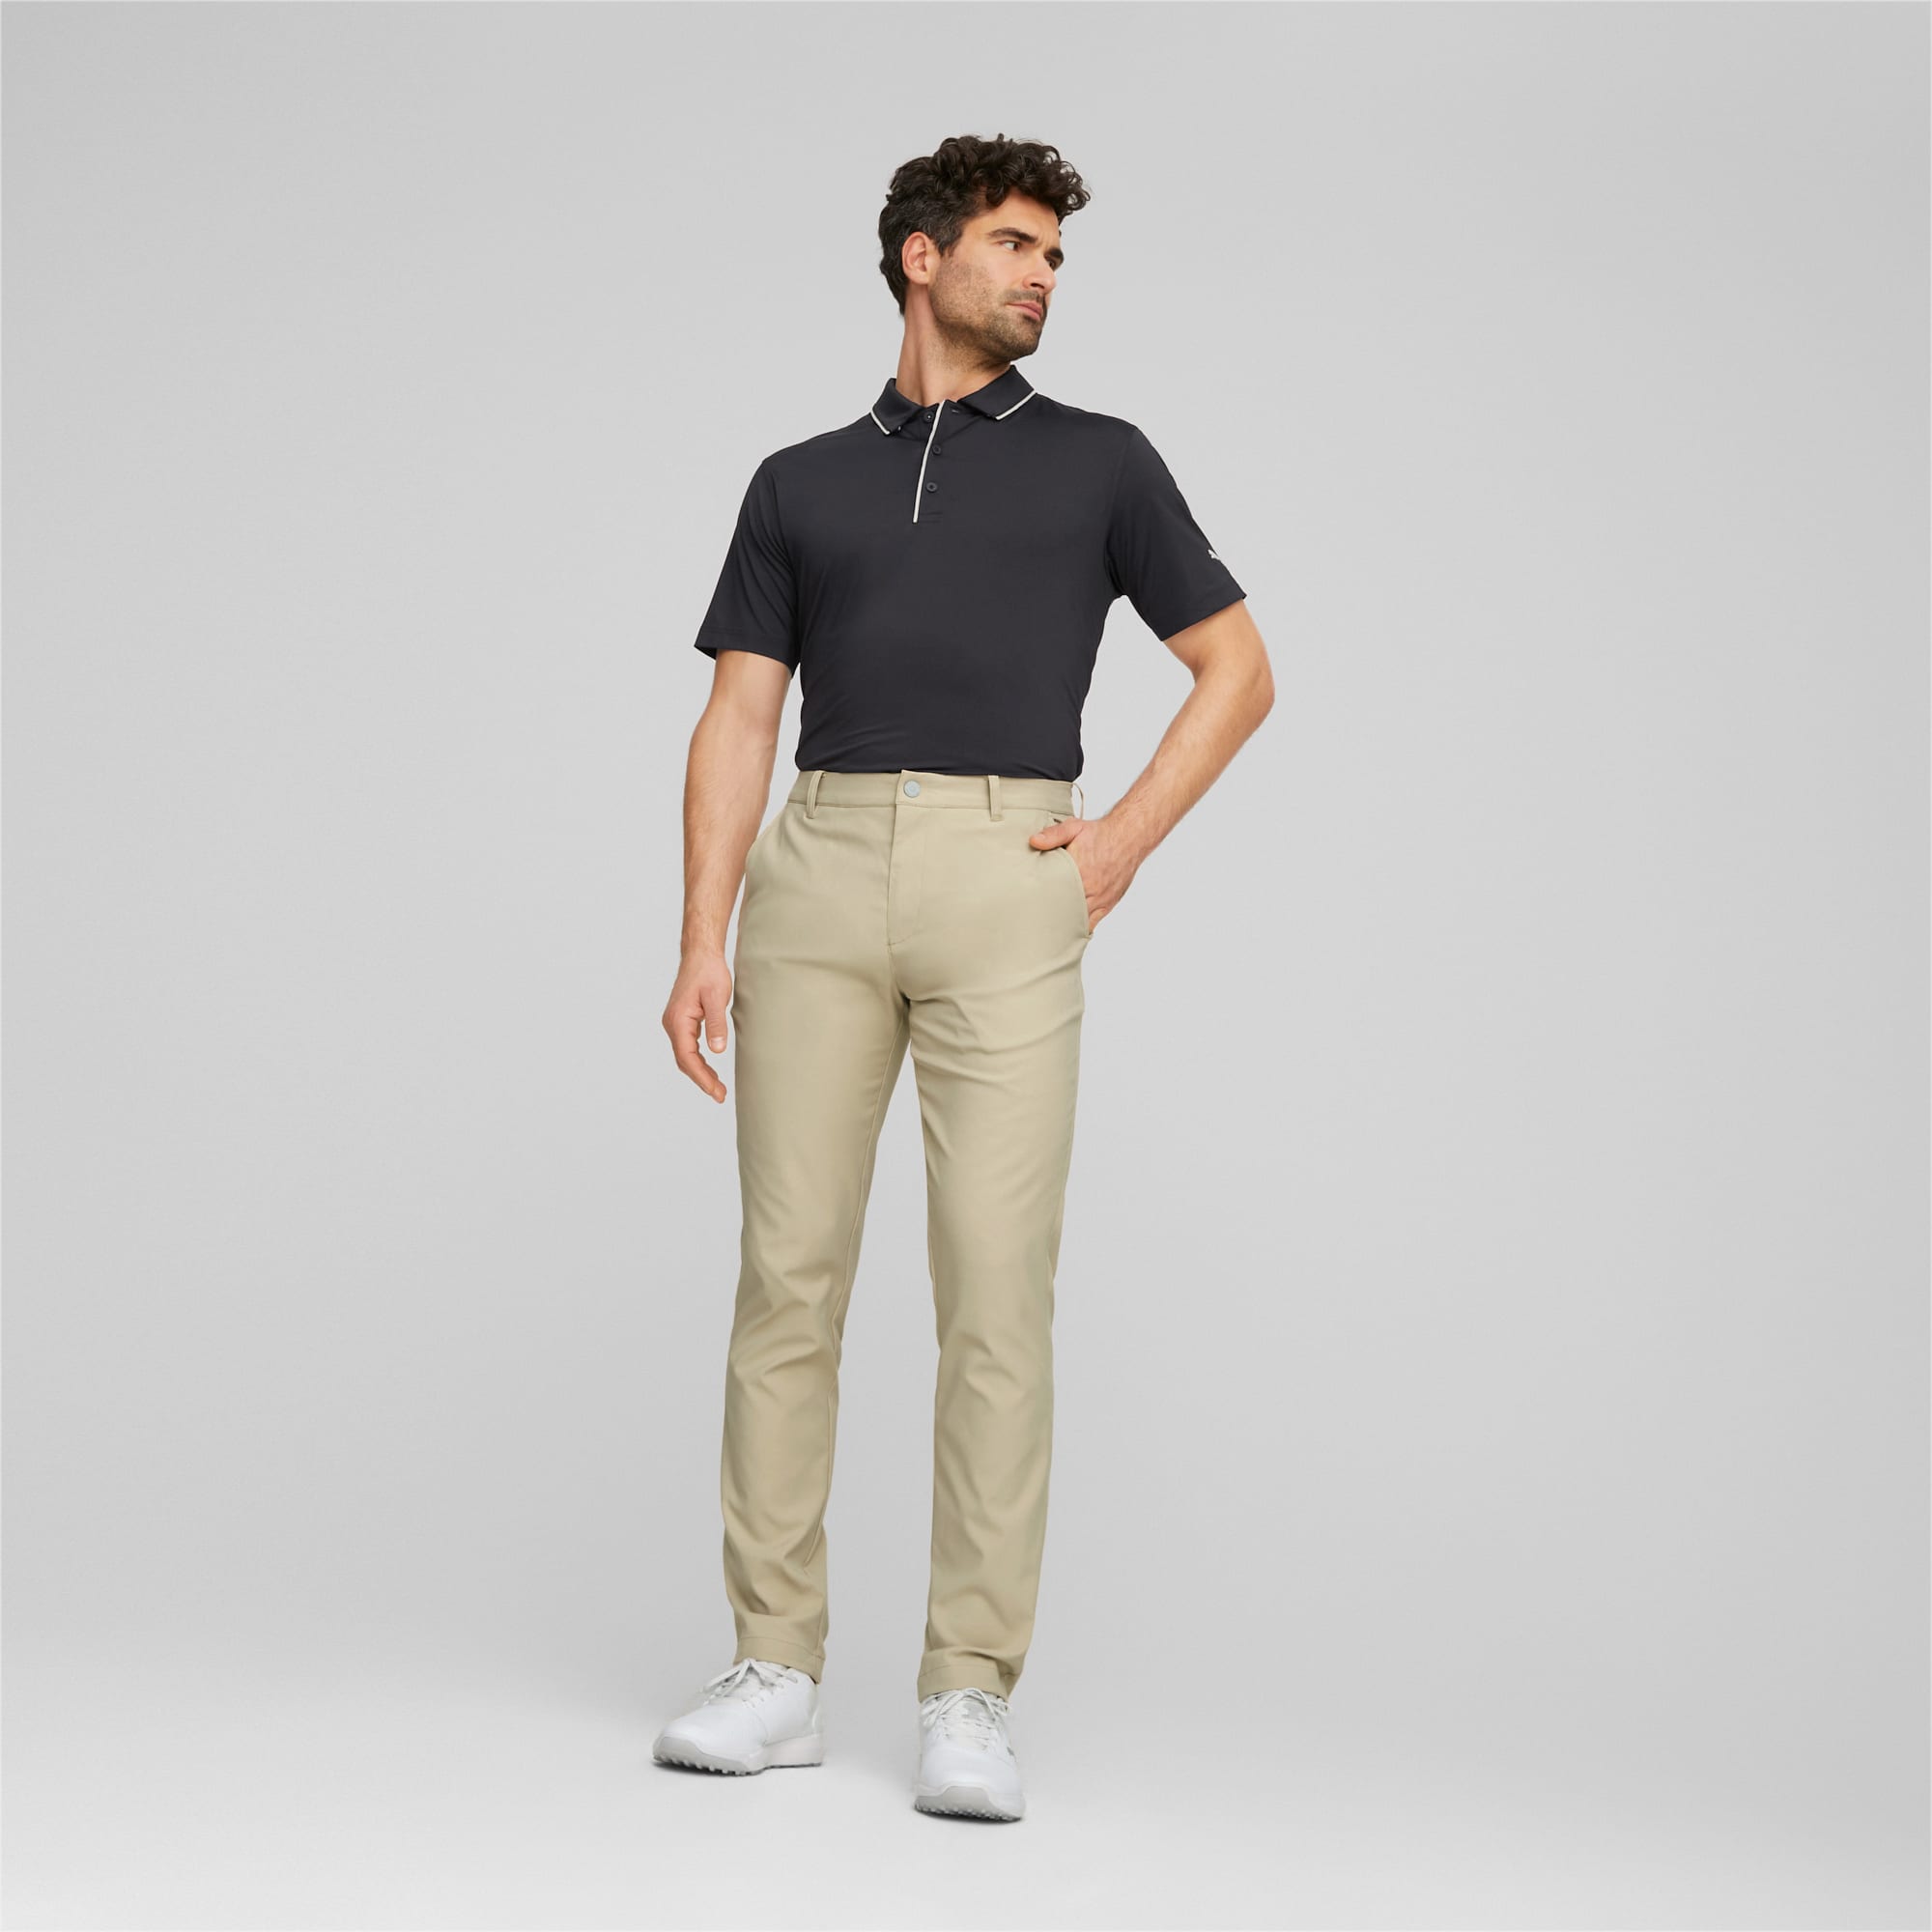 PUMA Dealer Tailored Golf Pants Men, Alabaster, Size 35/32, Clothing